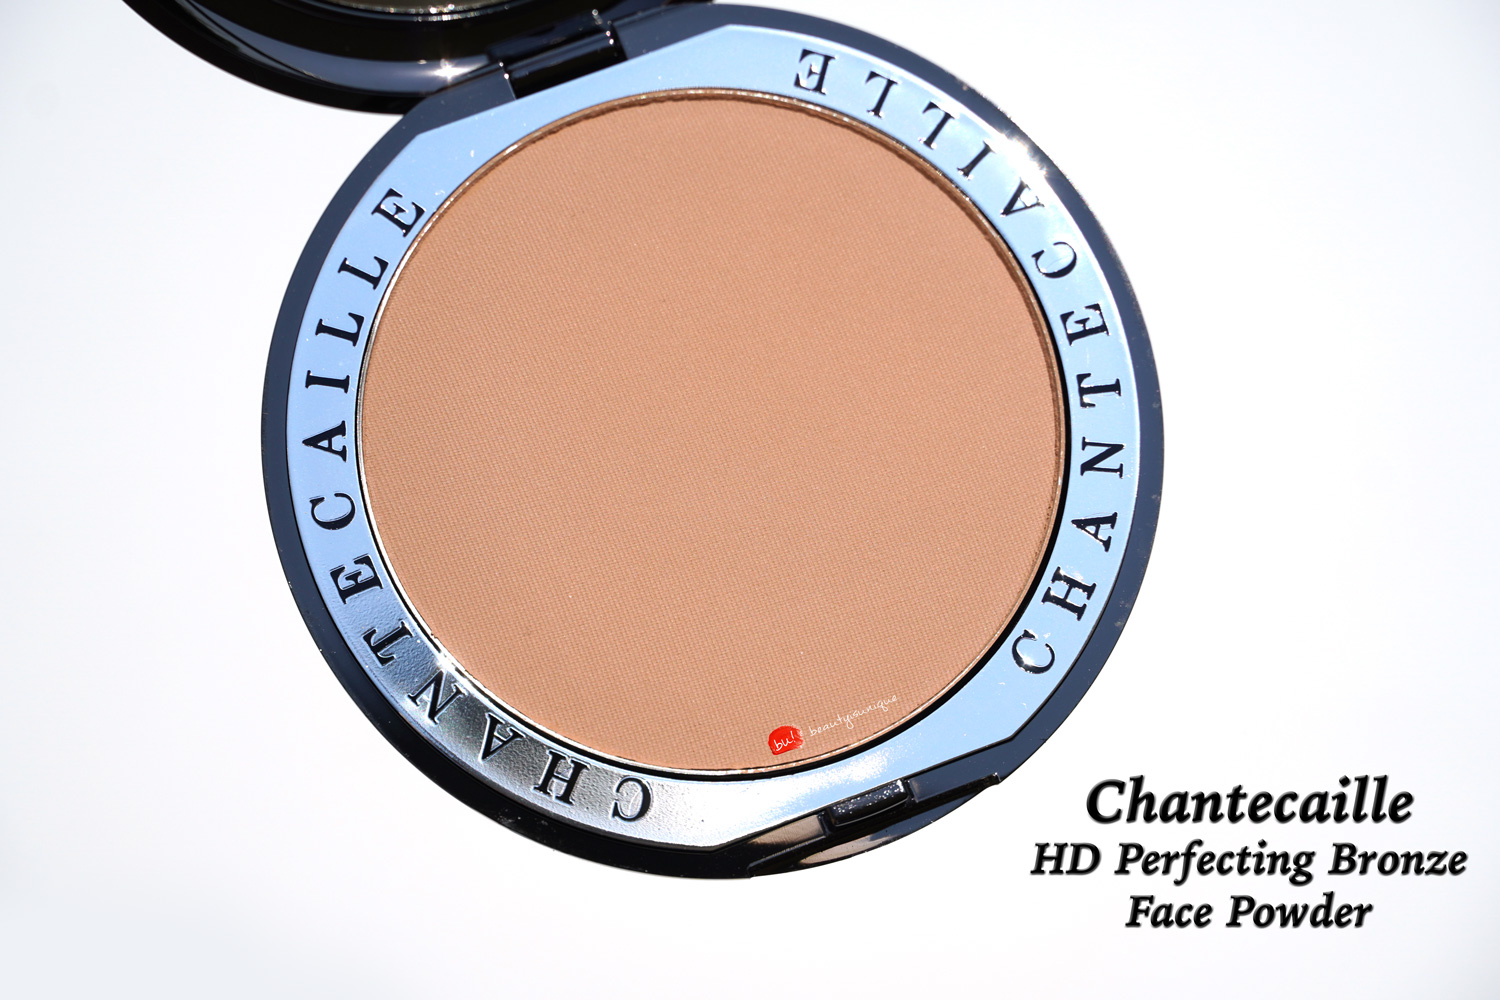 chantecaille-hd-perfecting-bronze-face-powder